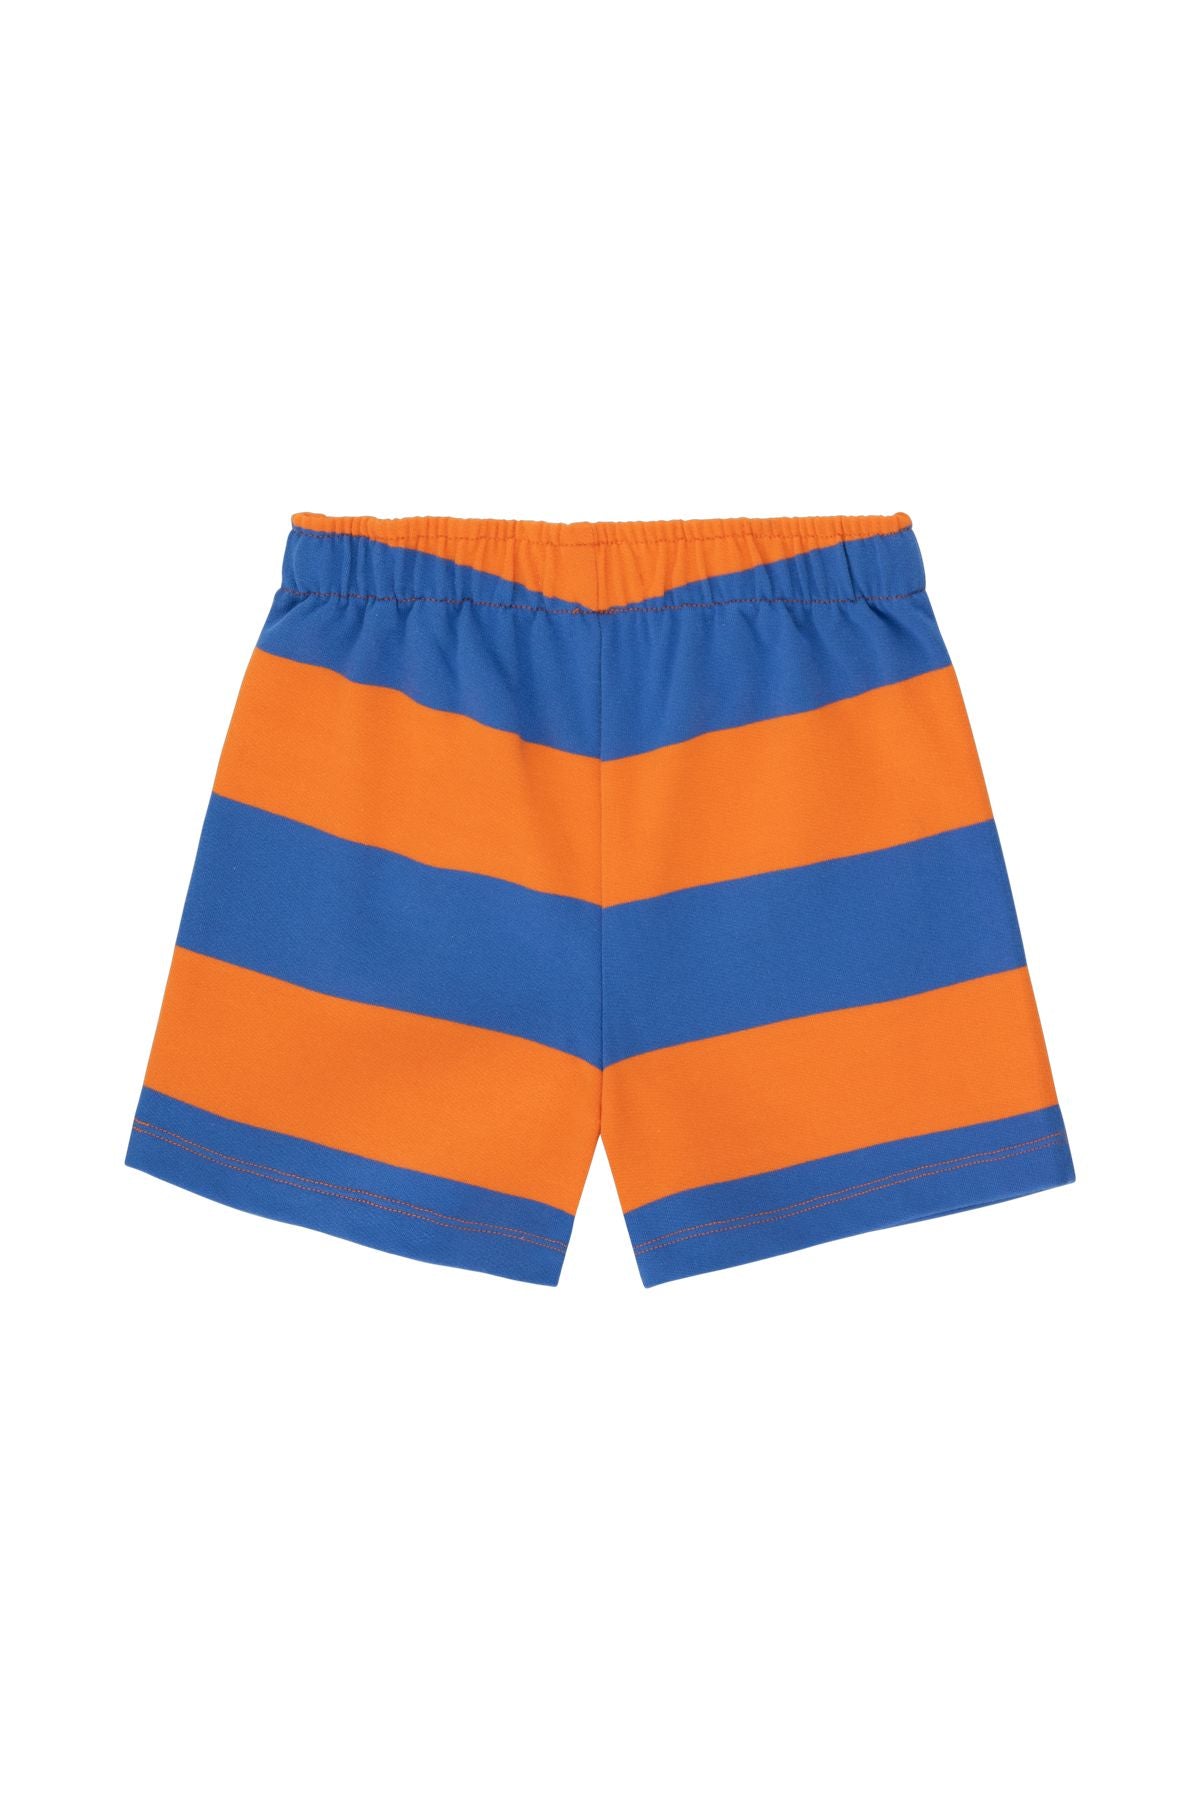 Tiny Cottons Stripes Shorts - Tangerine/ Ultramarine